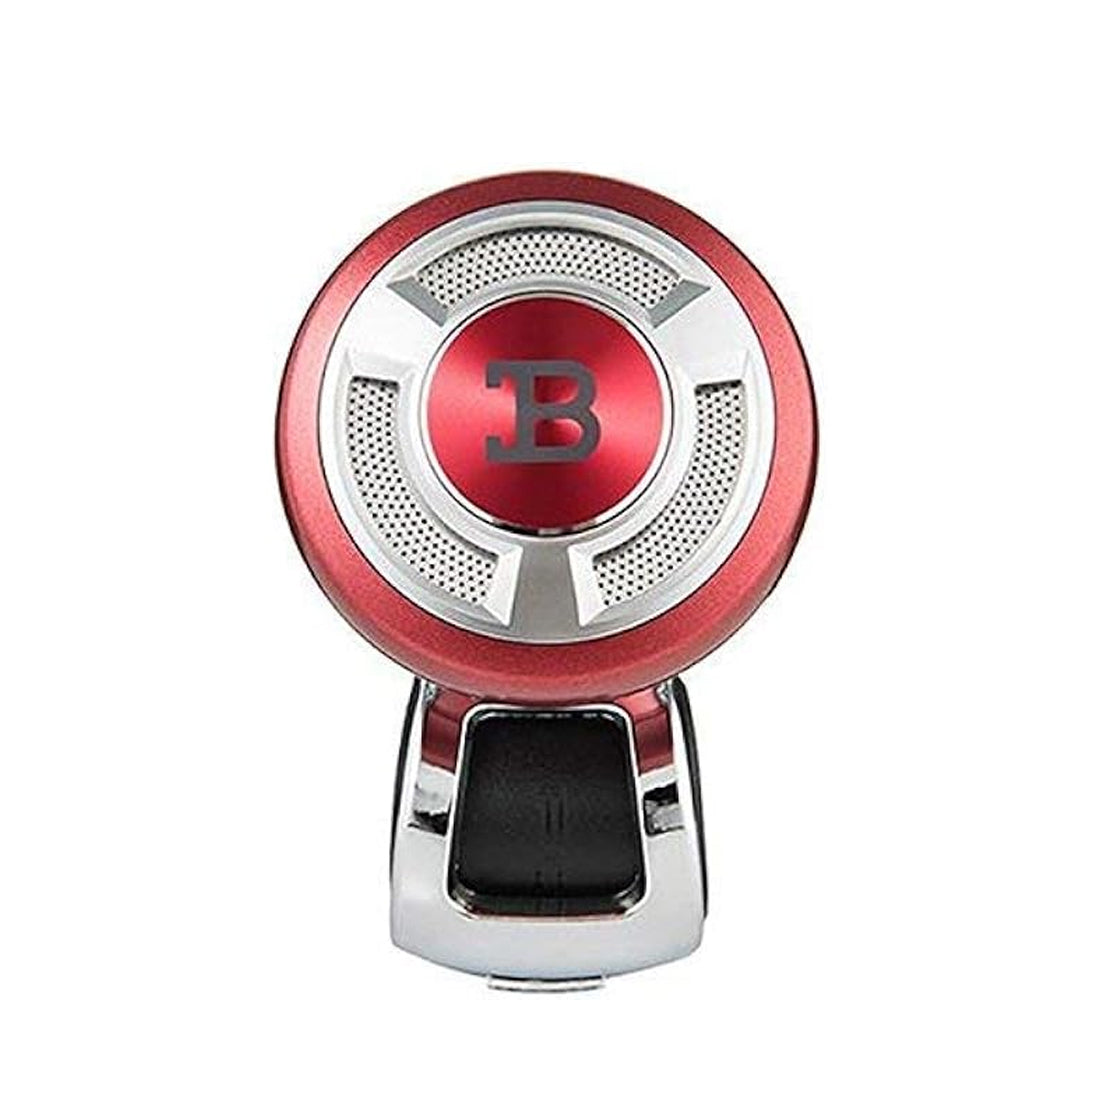 B Platinum Power Handel Car Steering Wheel Spinner Knob In Red